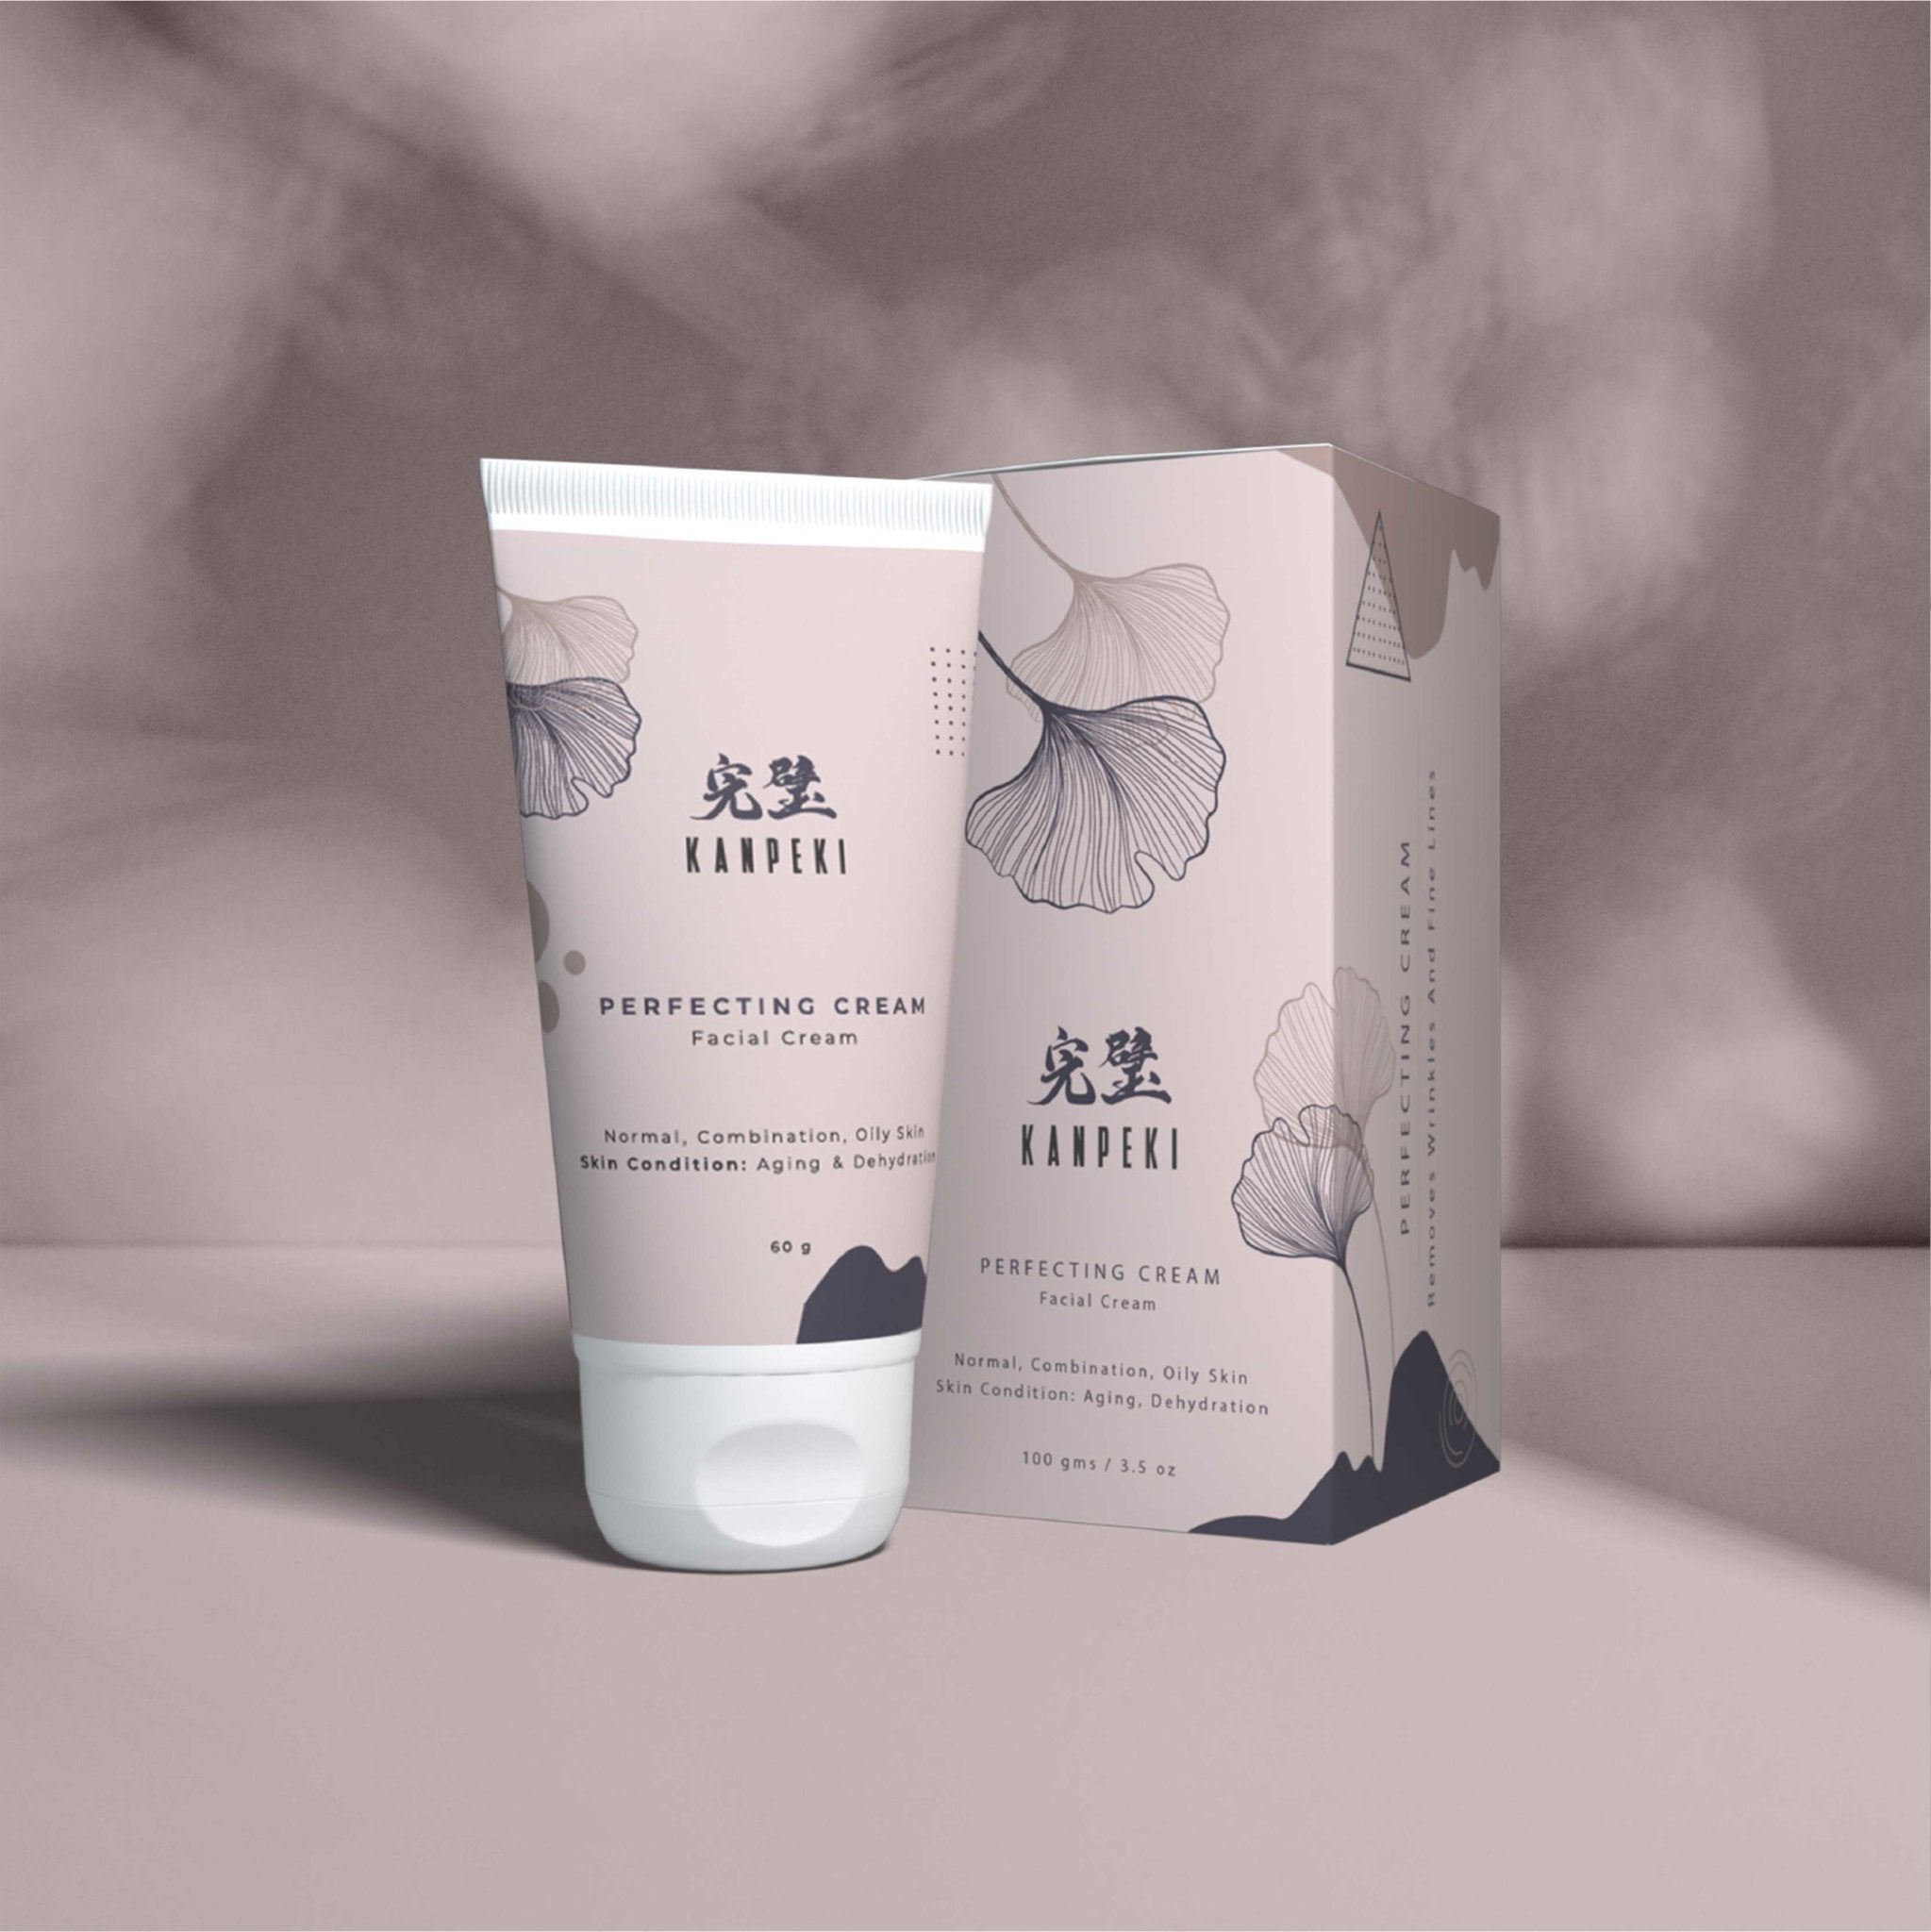 Perfecting Cream - Kanpeki Skincare